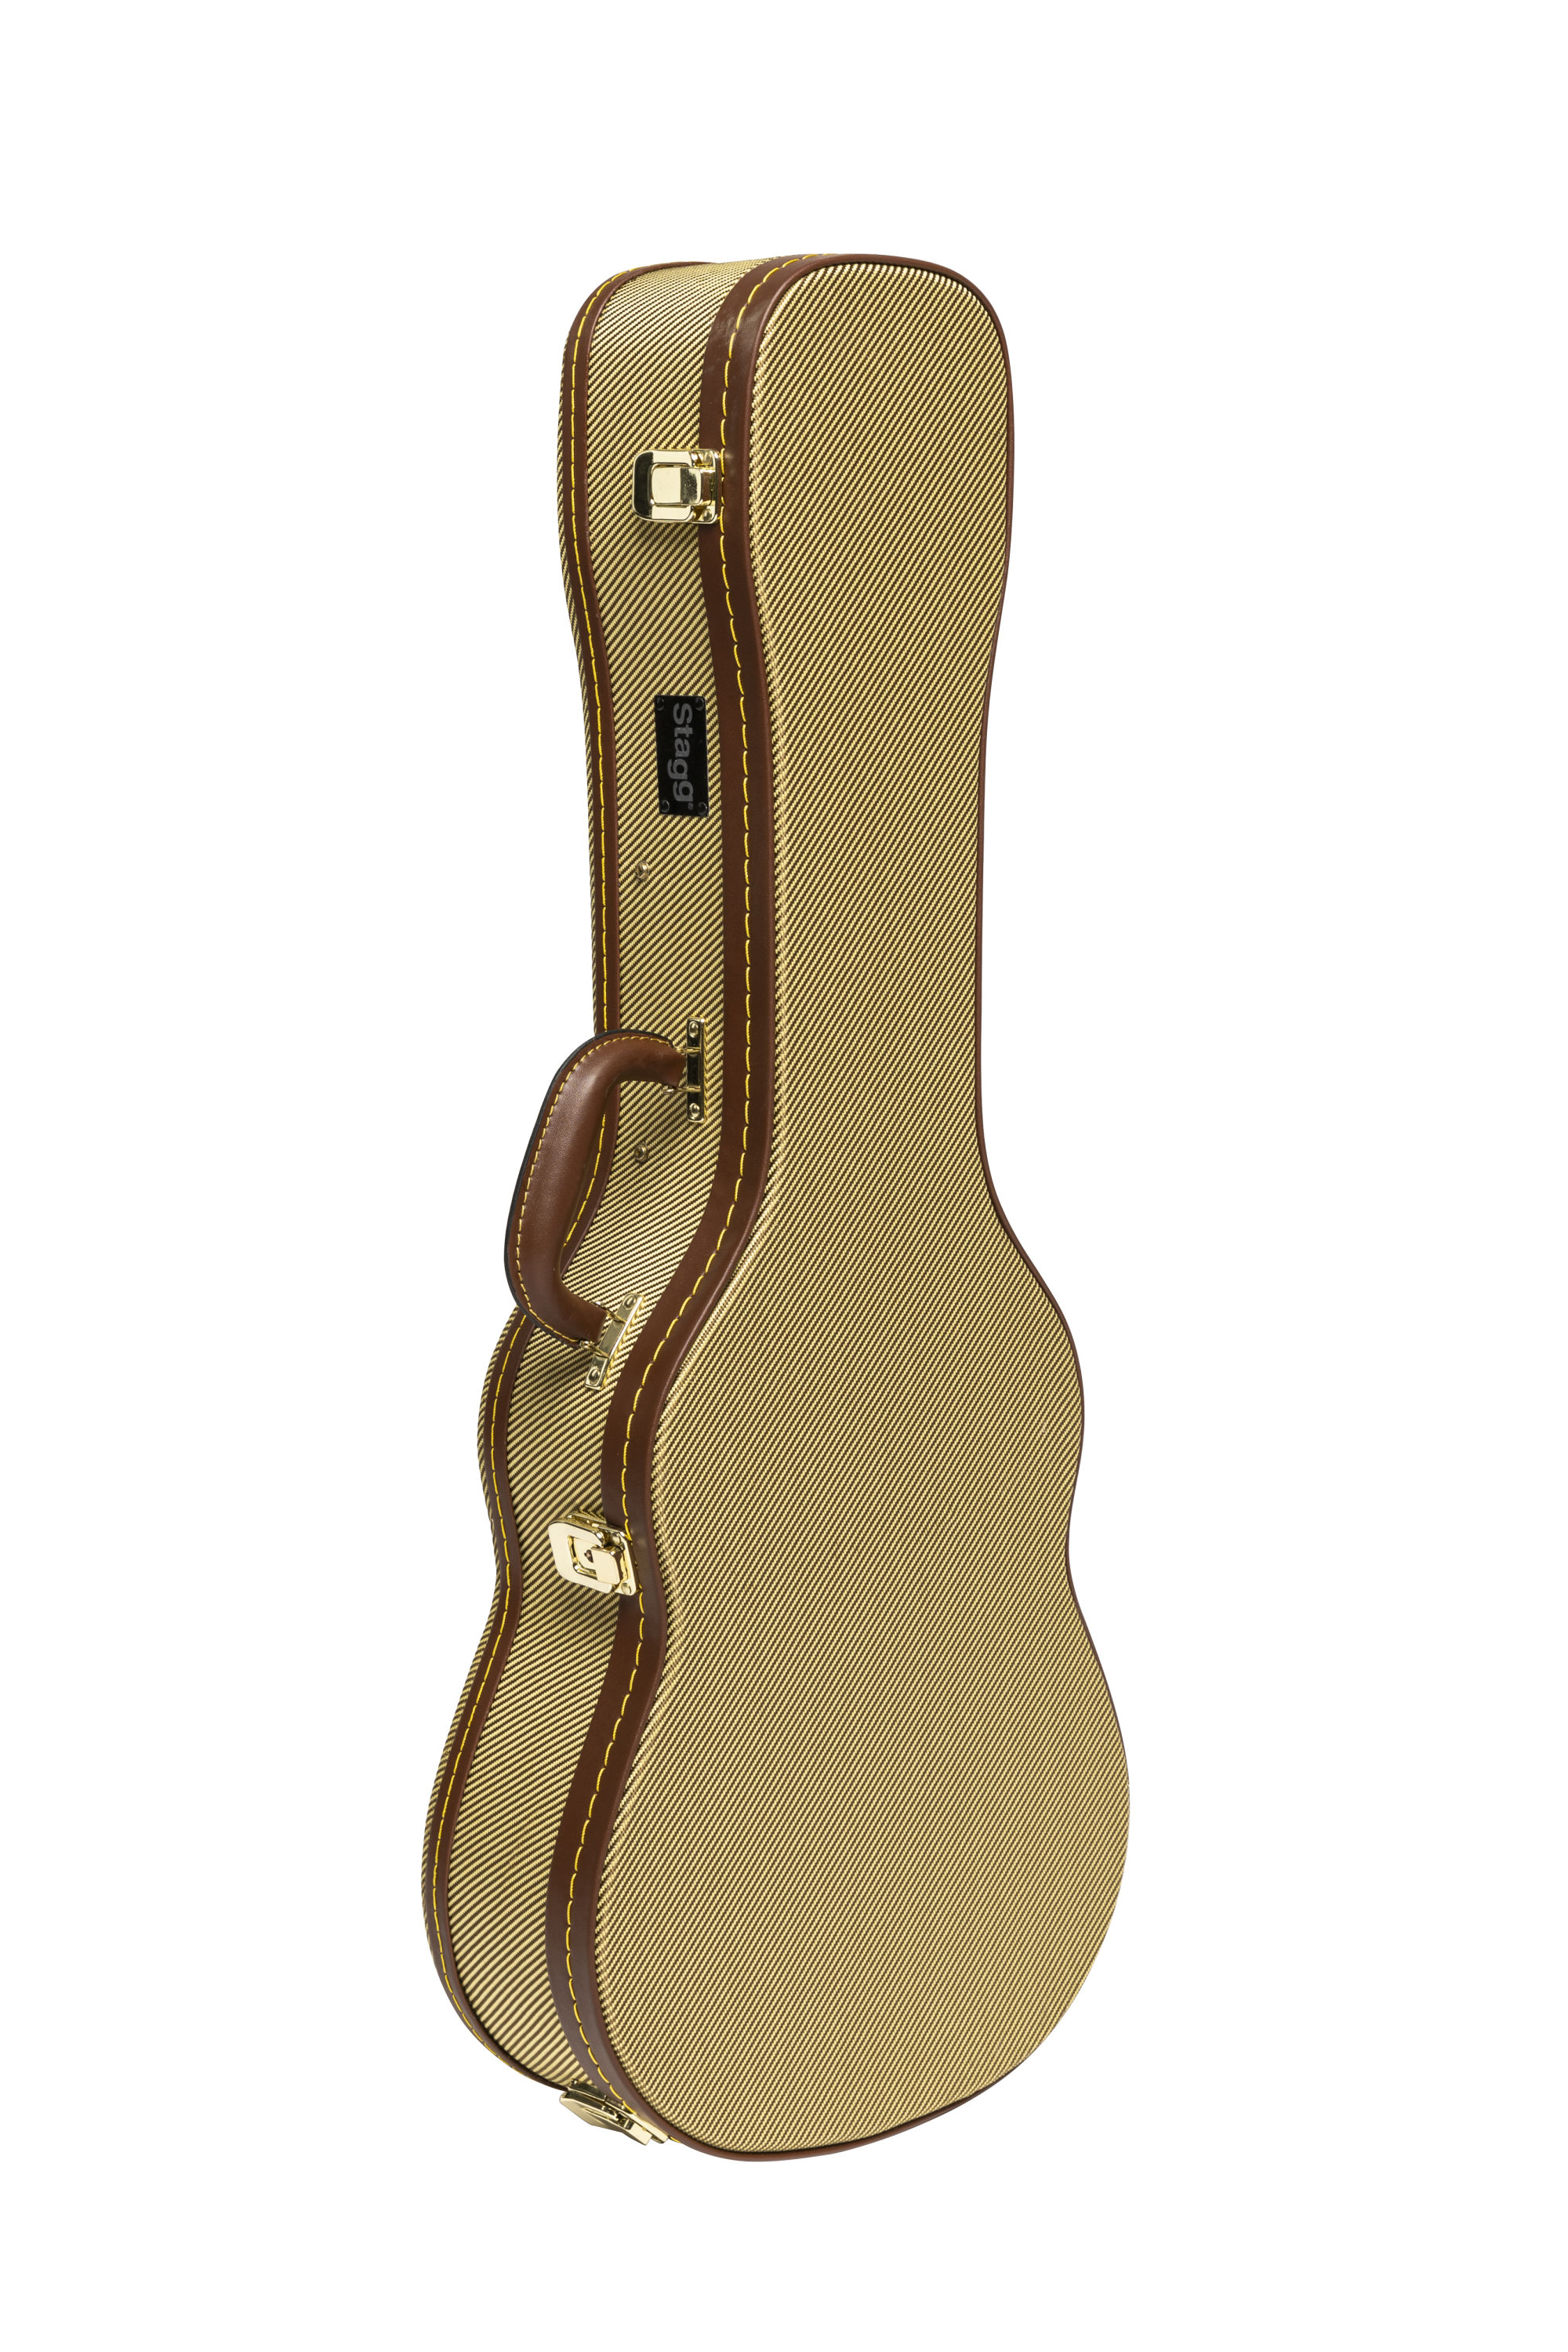 Stagg GCX-UKB GD, kufr pro barytonové ukulele